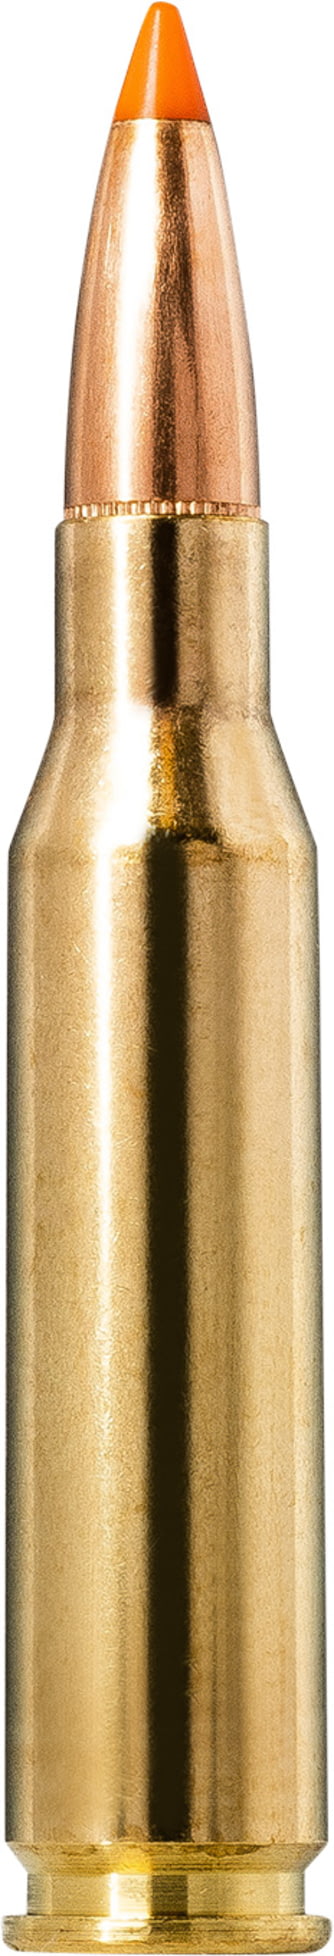 Norma Tipstrike 7mm-08 Remington 160 Grain Norma Tipstrike Brass Cased Centerfire Rifle Ammunition